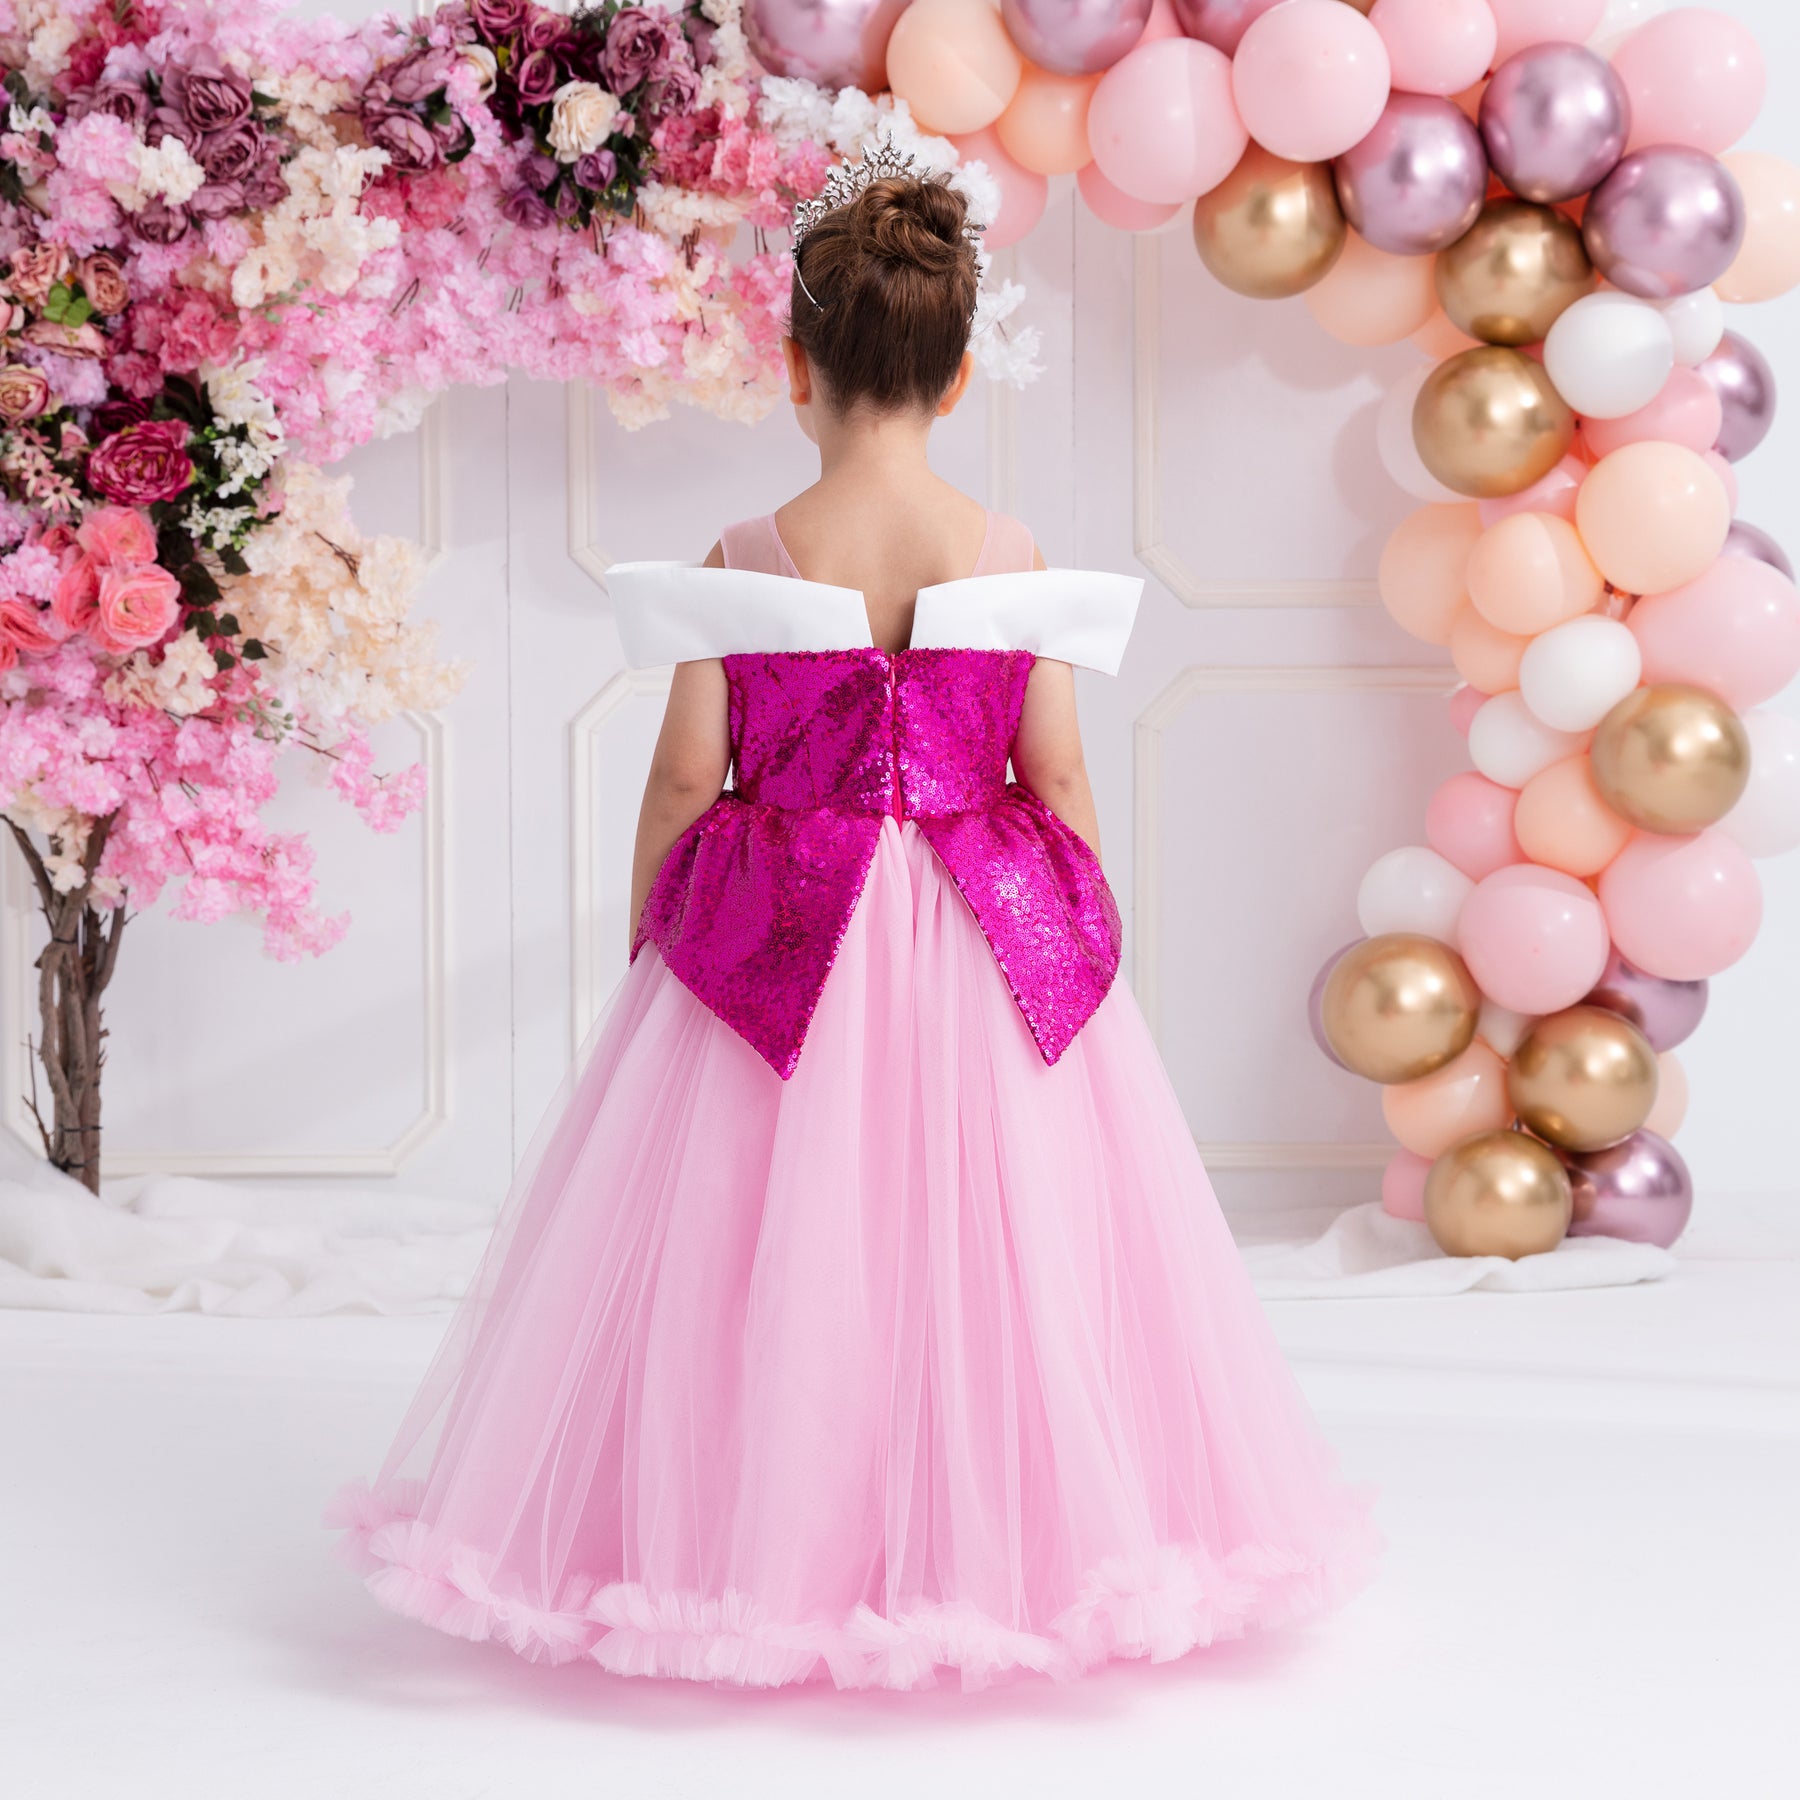 Girls Deluxe Aurora Sleeping Beauty Inspired Princess Dress